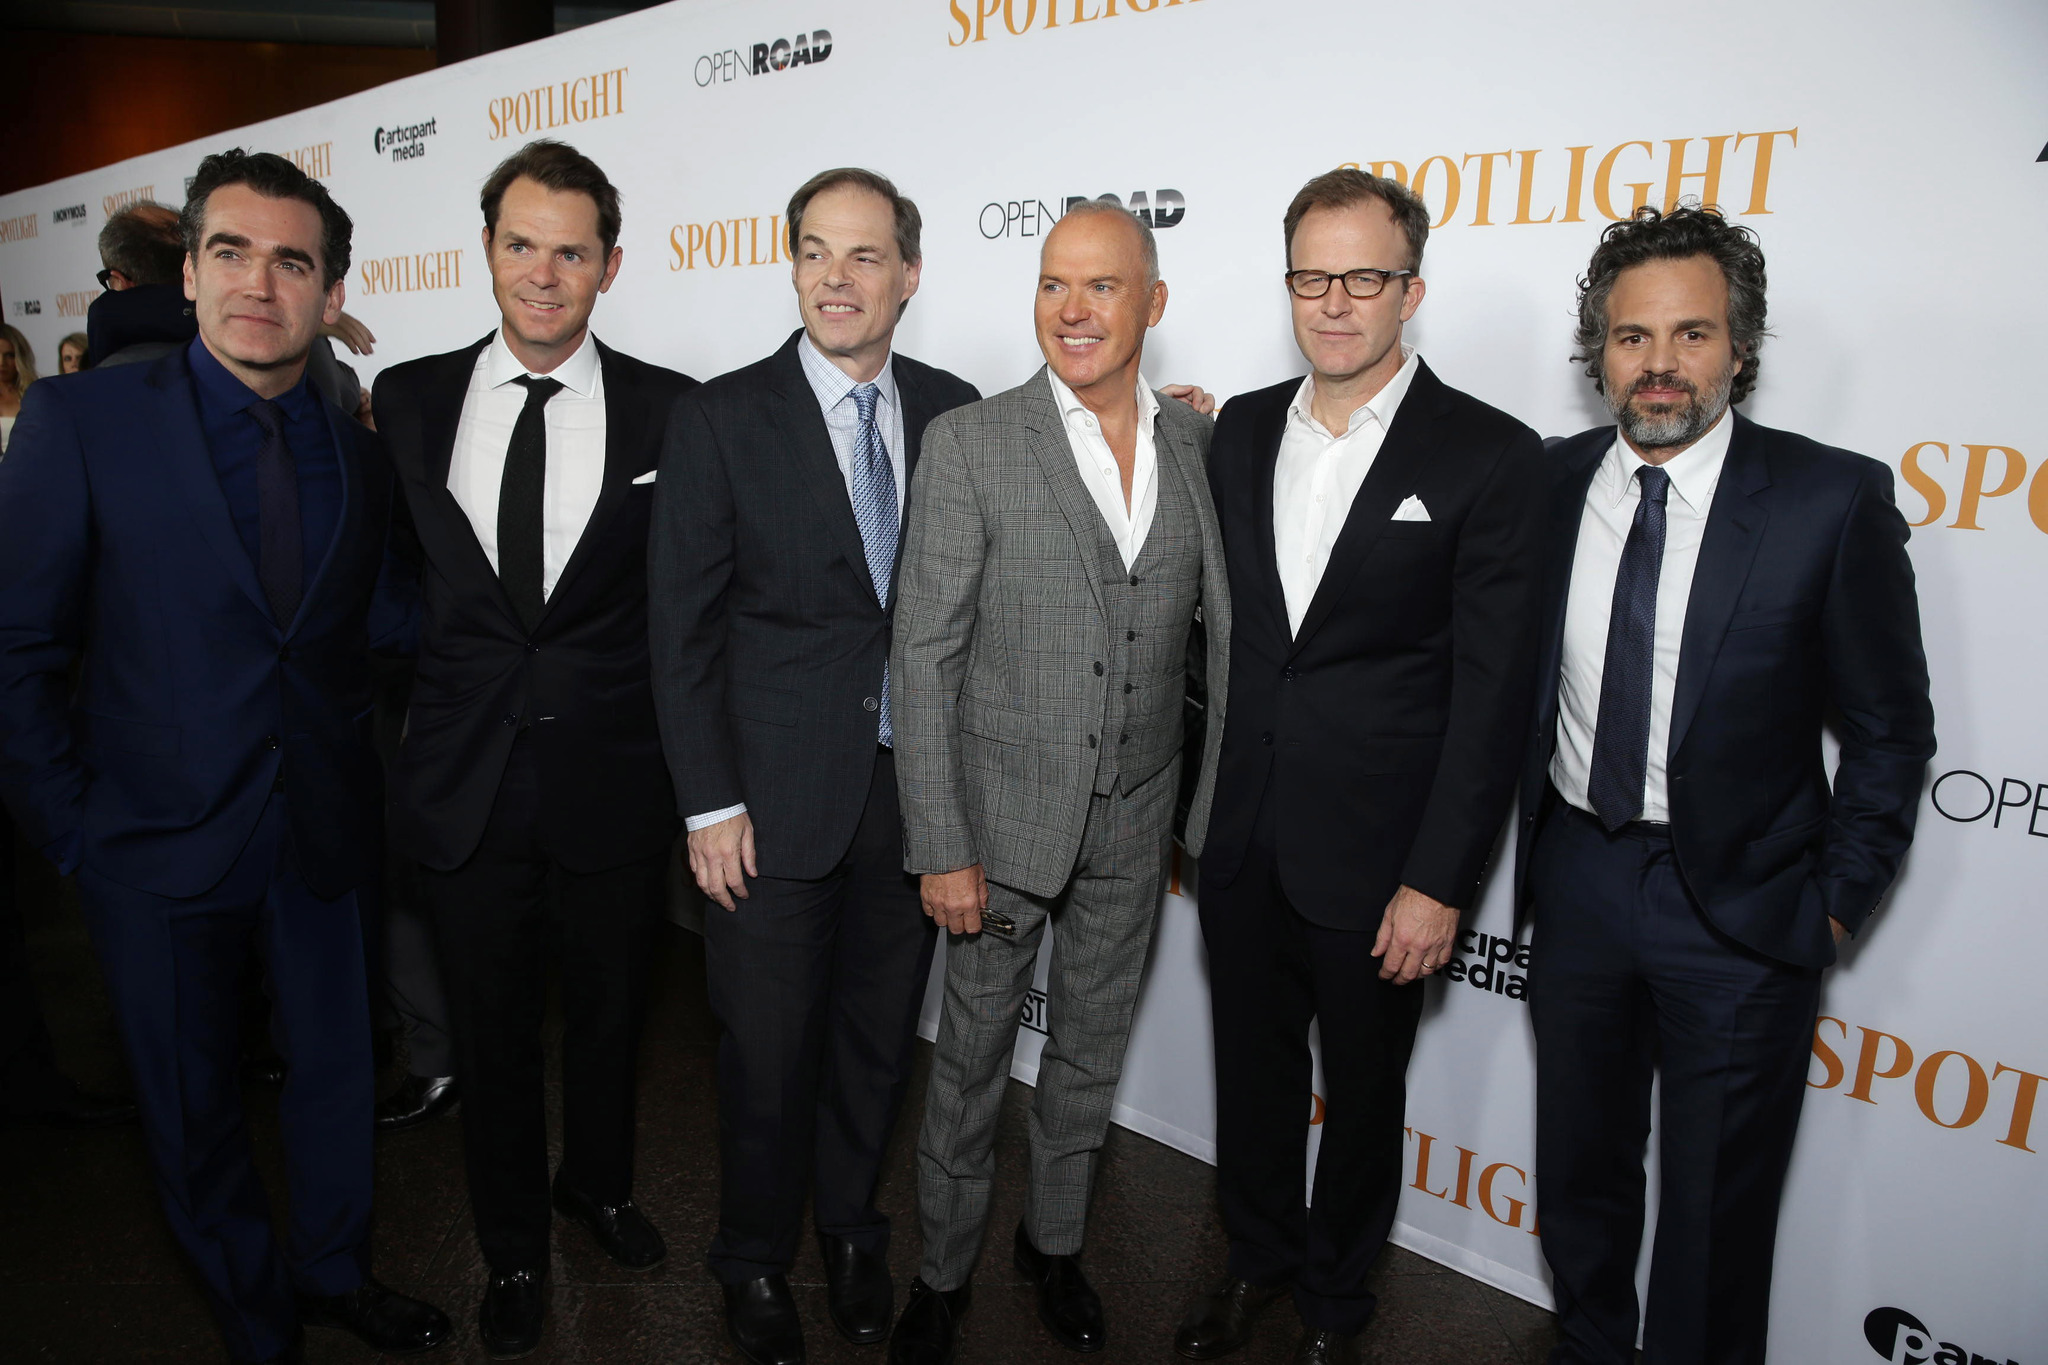 Michael Keaton, Jason Cassidy, Tom McCarthy, Tom Ortenberg and Mark Ruffalo at event of Sensacija (2015)